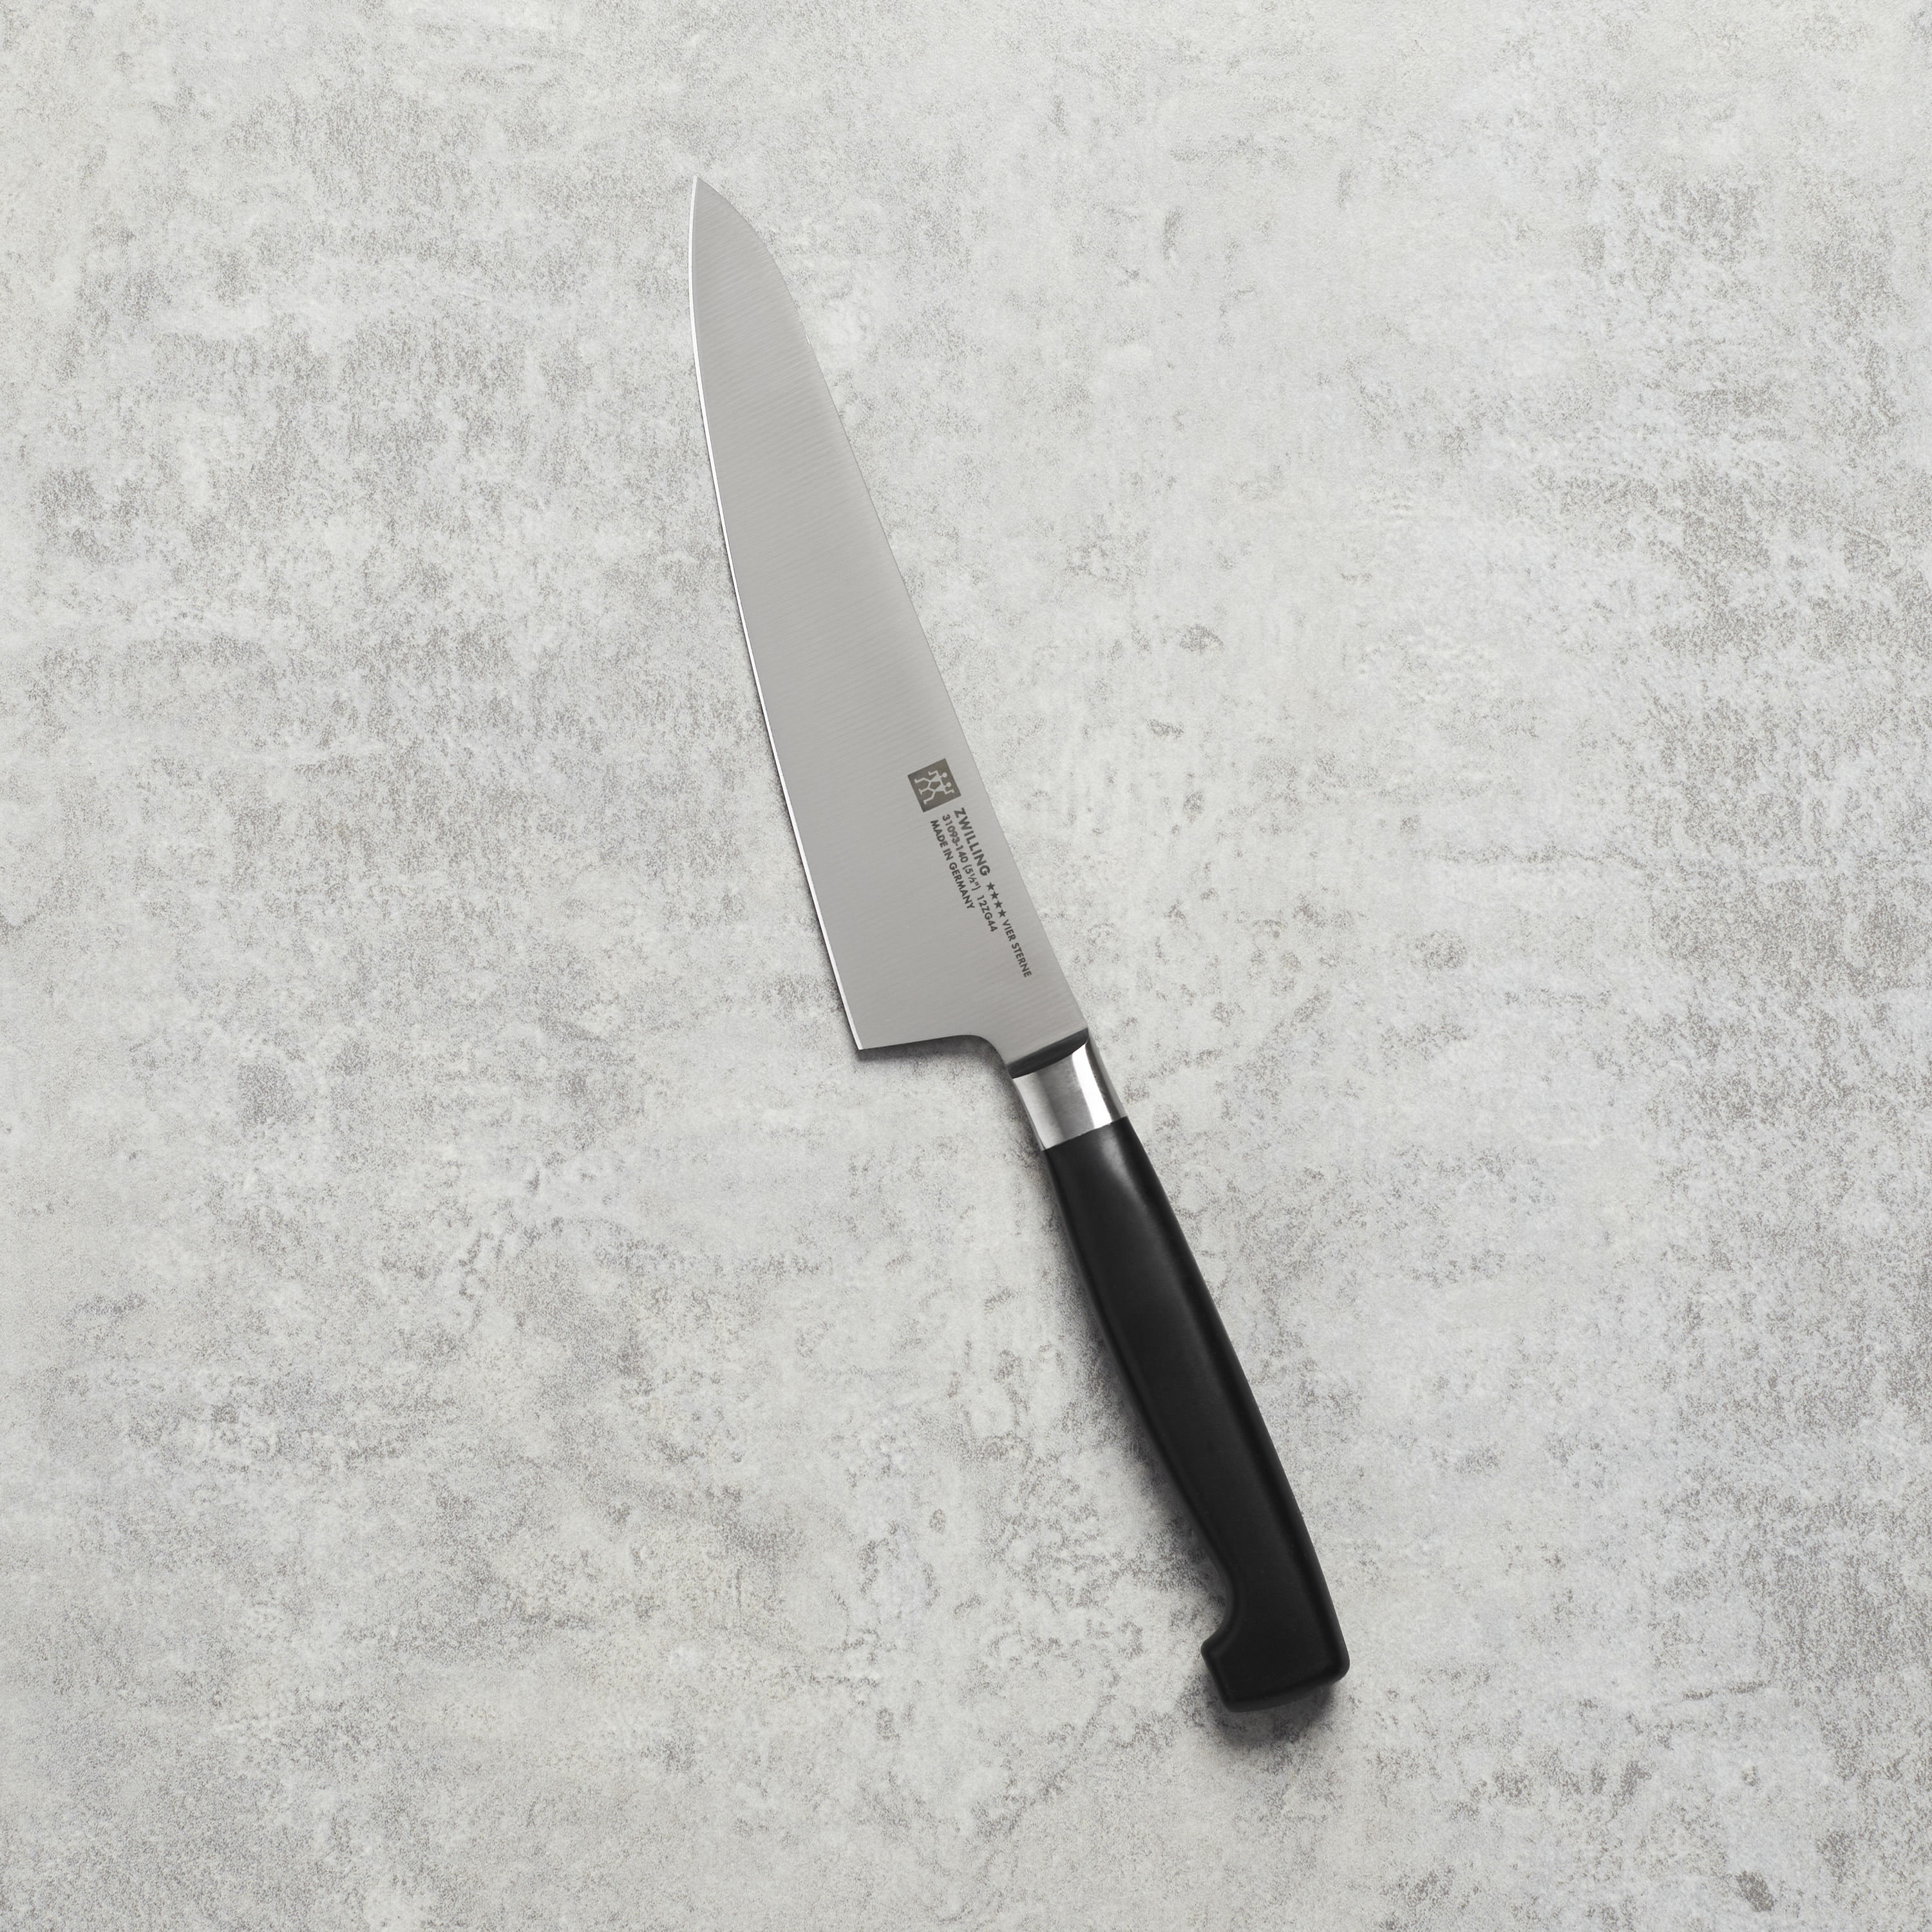 Easi-Grip Arthritis Bread Knife :: ergonomic serrated knife perfect